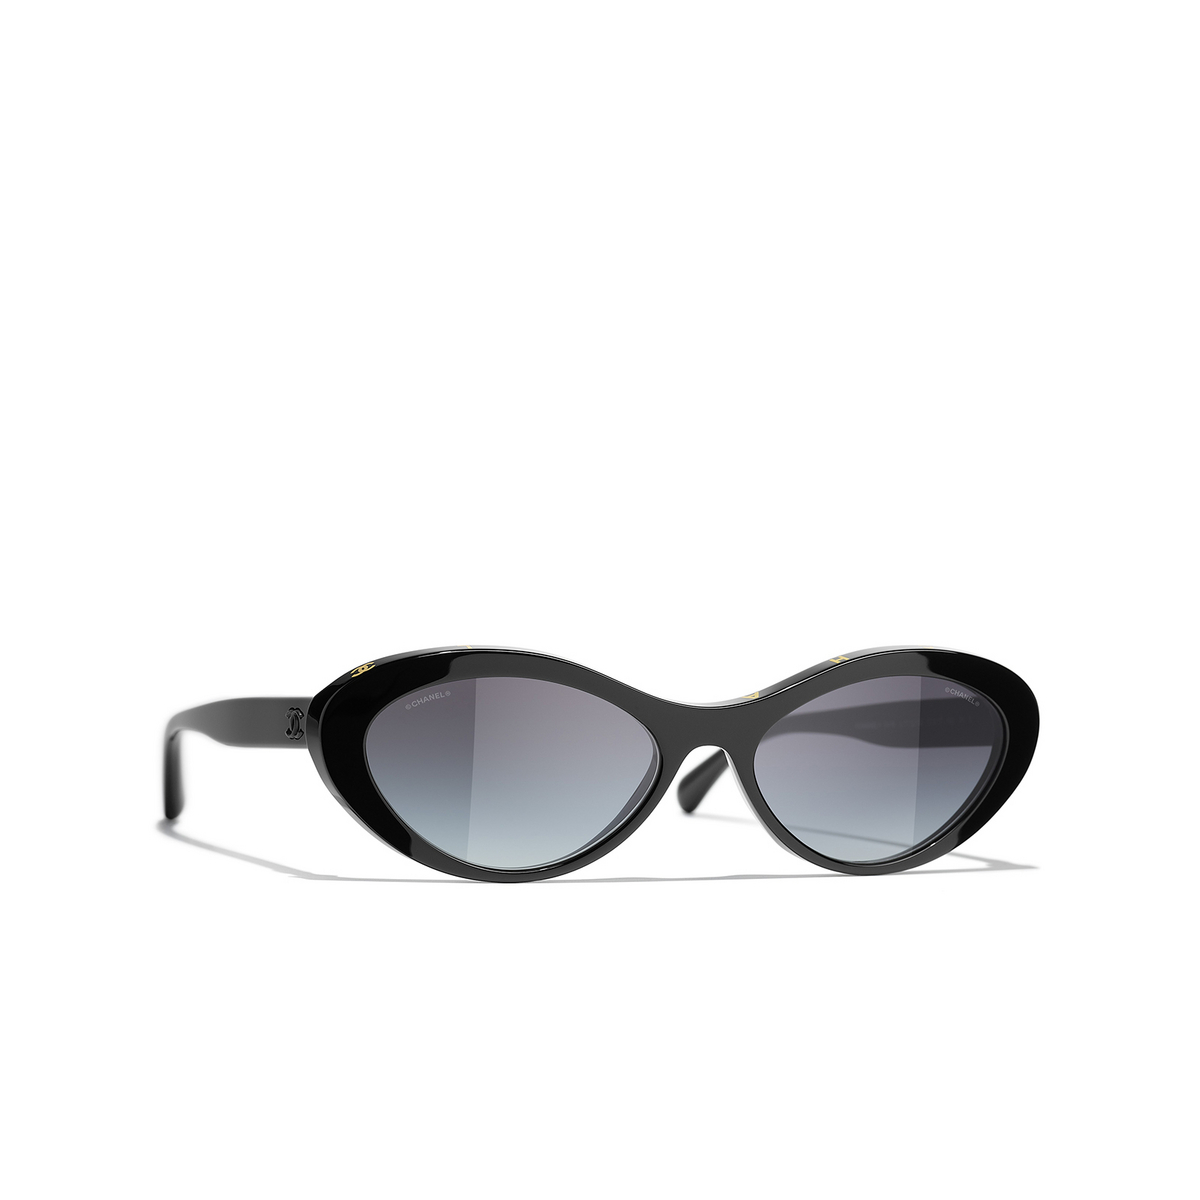 CHANEL oval Sunglasses 1712S6 Black & Green - three-quarters view